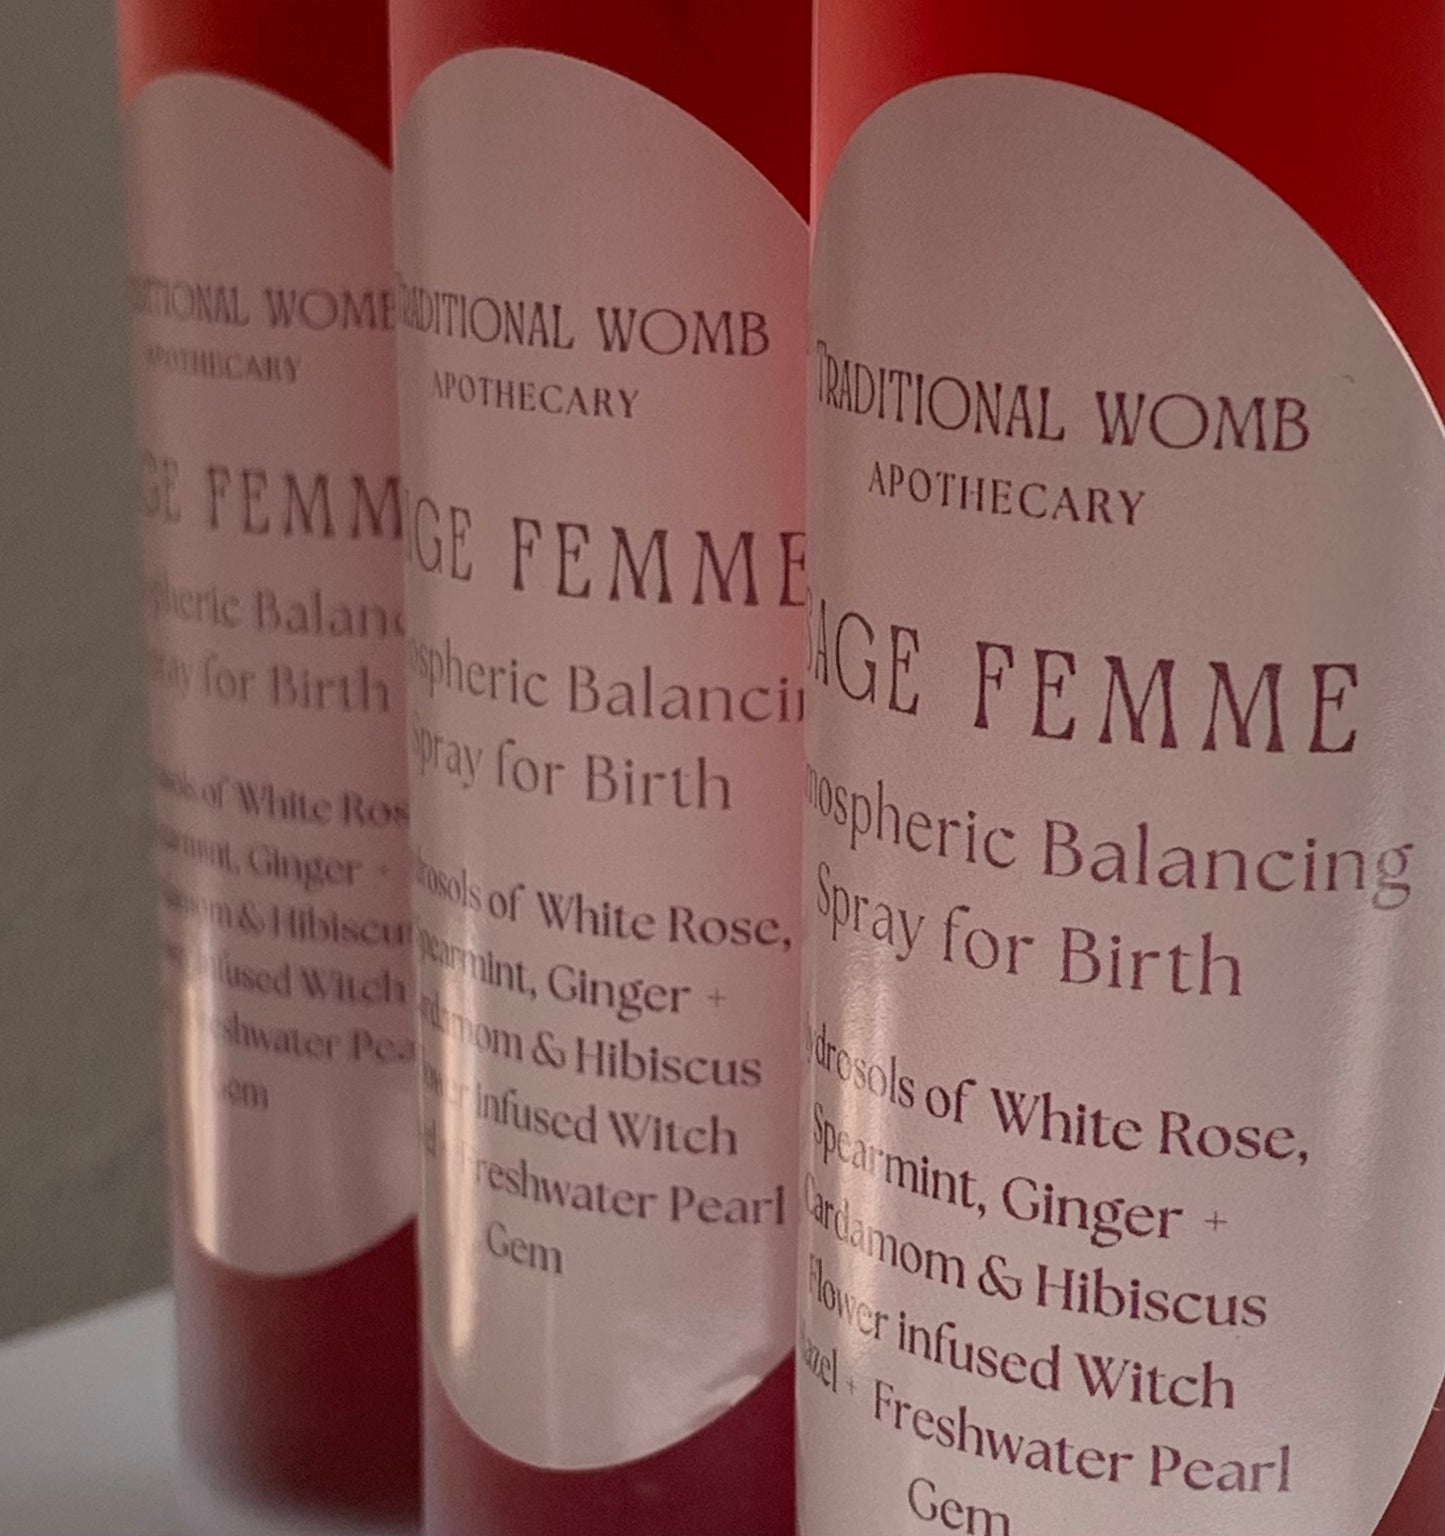 Sage Femme Atmospheric Balancing Spray for Birth